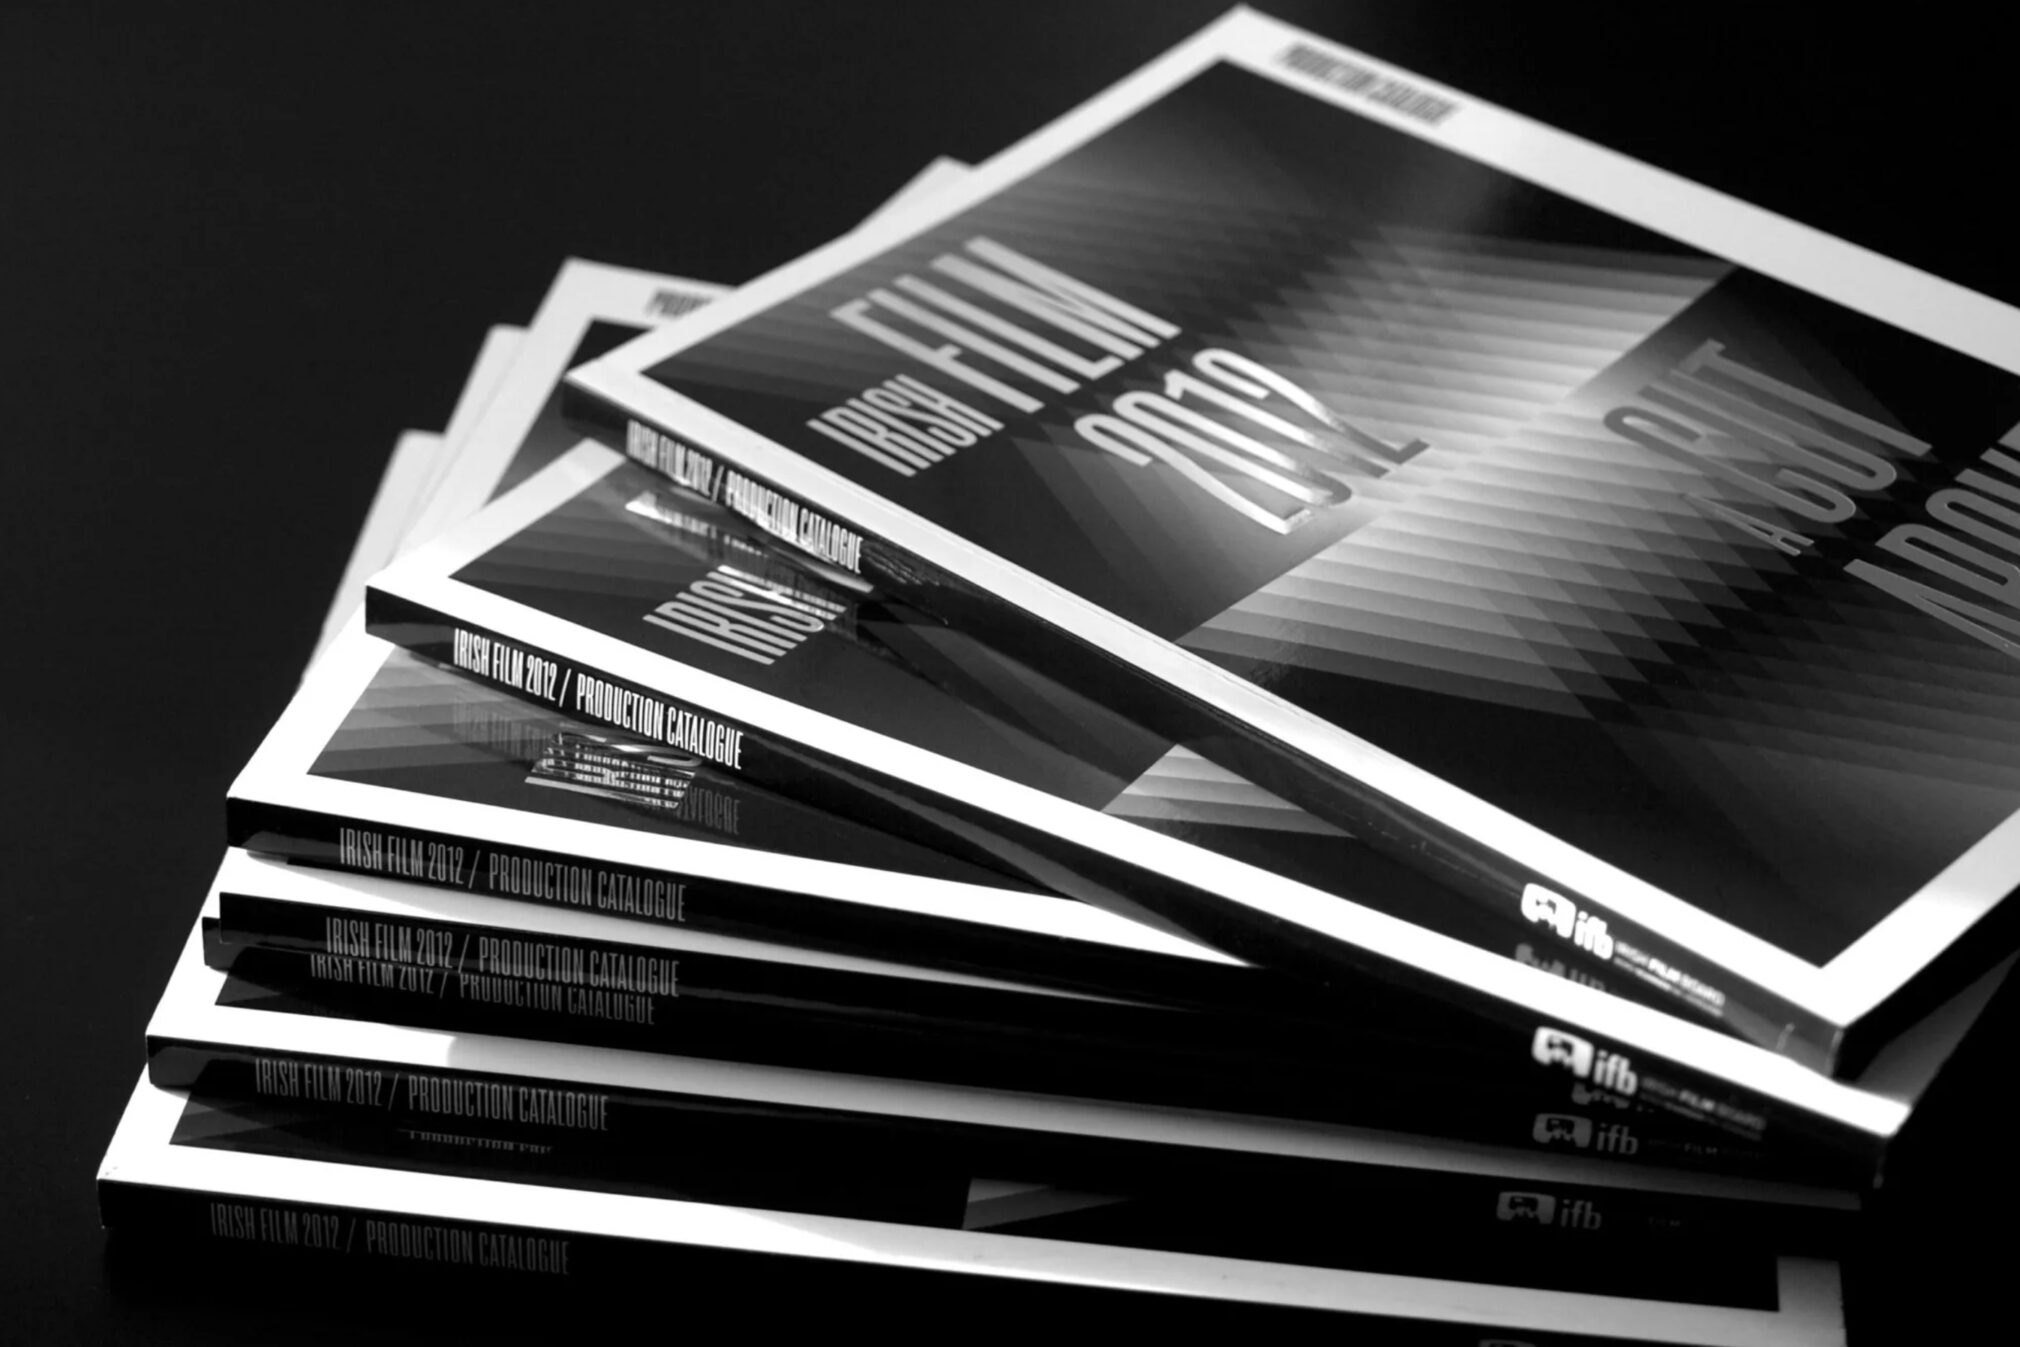 IFB brochure covers 2012